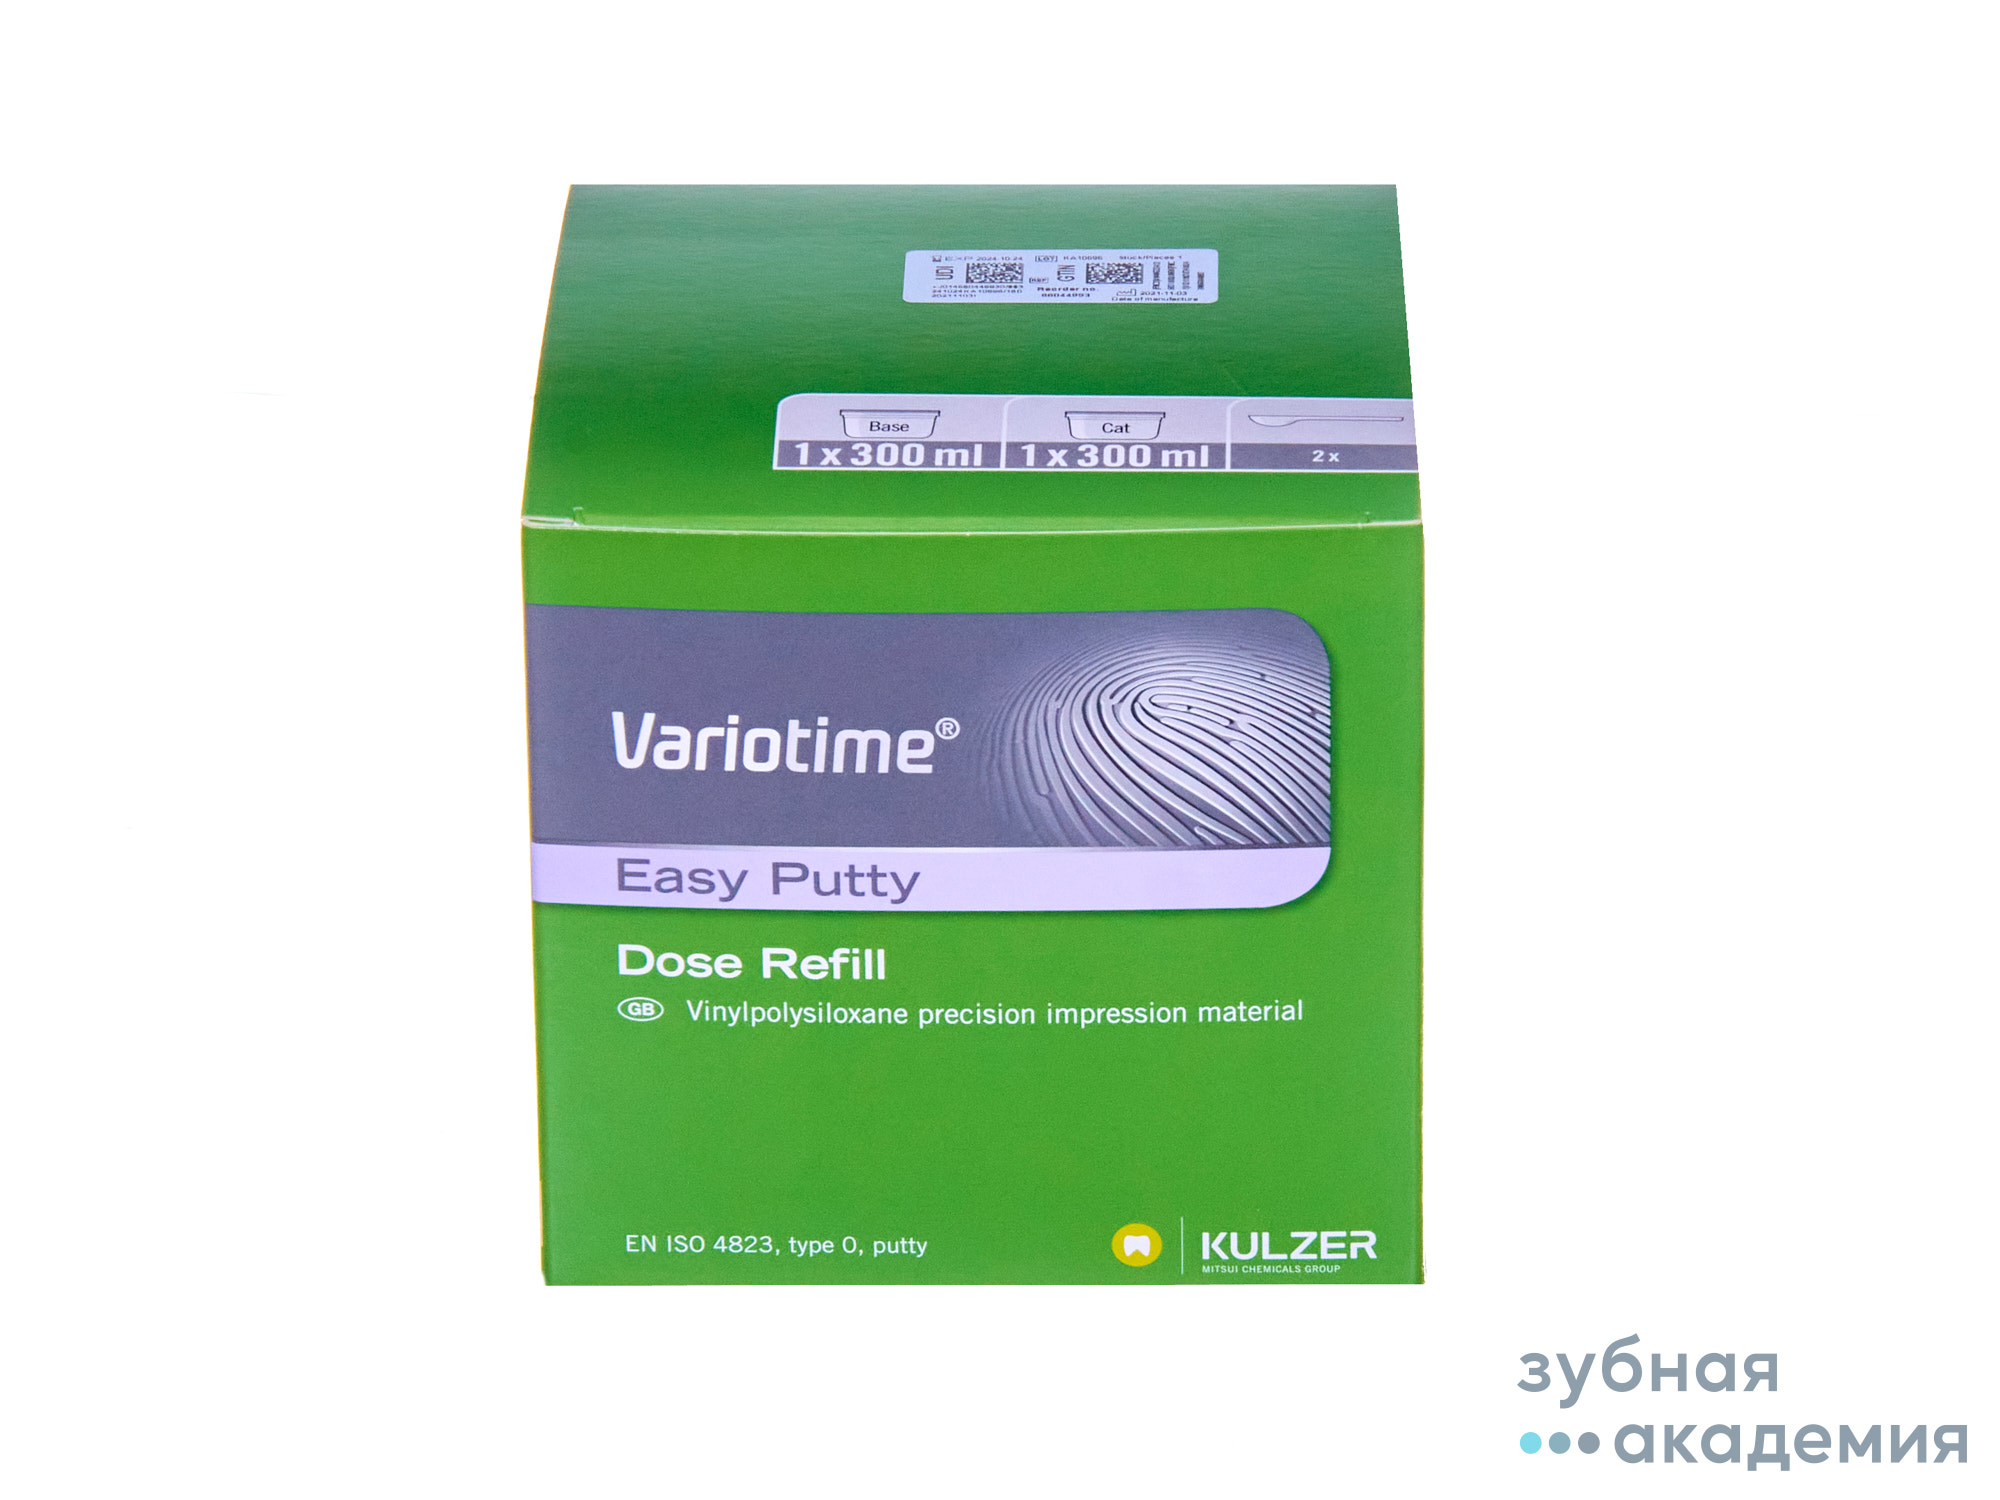 Variotime Easy Putty(Вариотайм изи патти) упаковка 2*300 мл /Heraeus Kulzer/ Германия